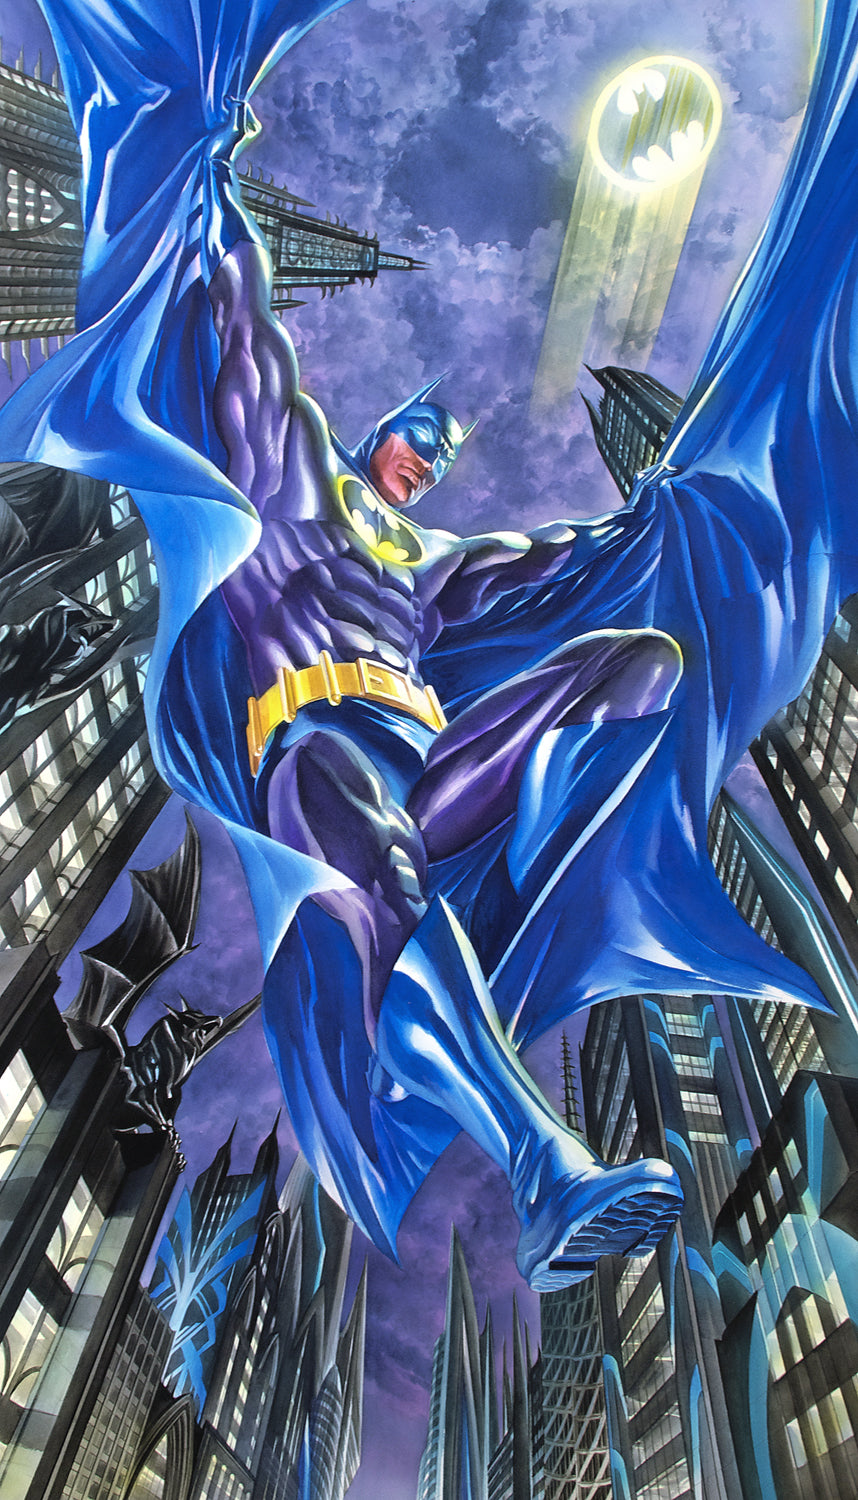 Wall Art Print The Dark Knight Trilogy - Batman Legend, Gifts &  Merchandise